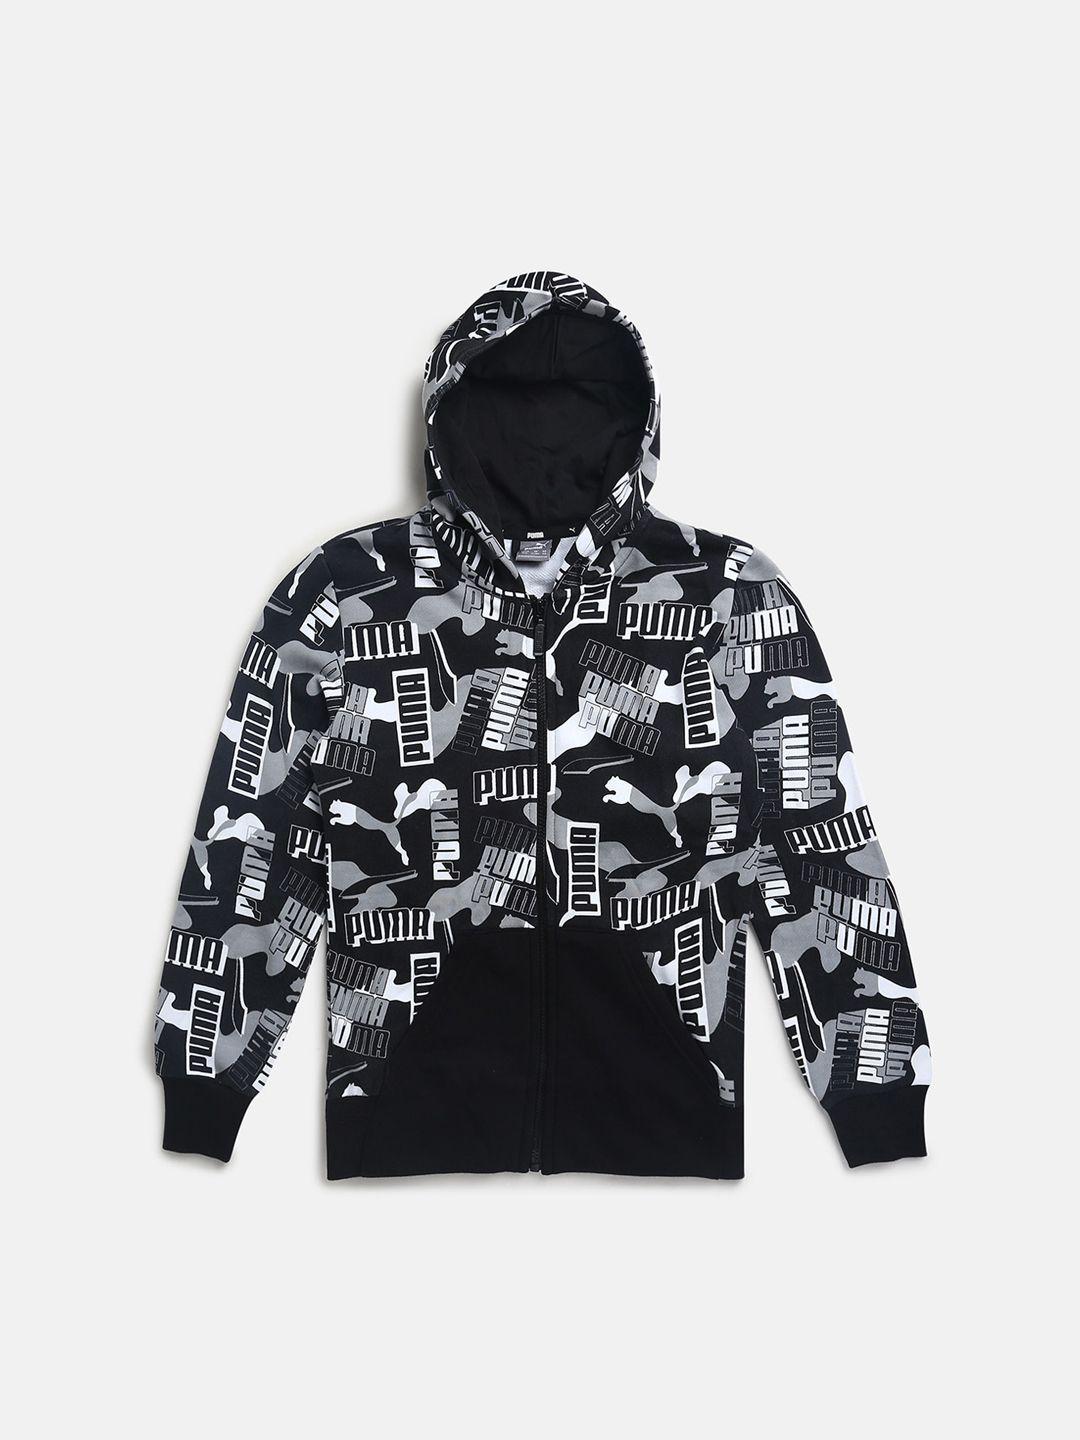 puma-boys-black-&-white-brand-logo-sweat-jacket